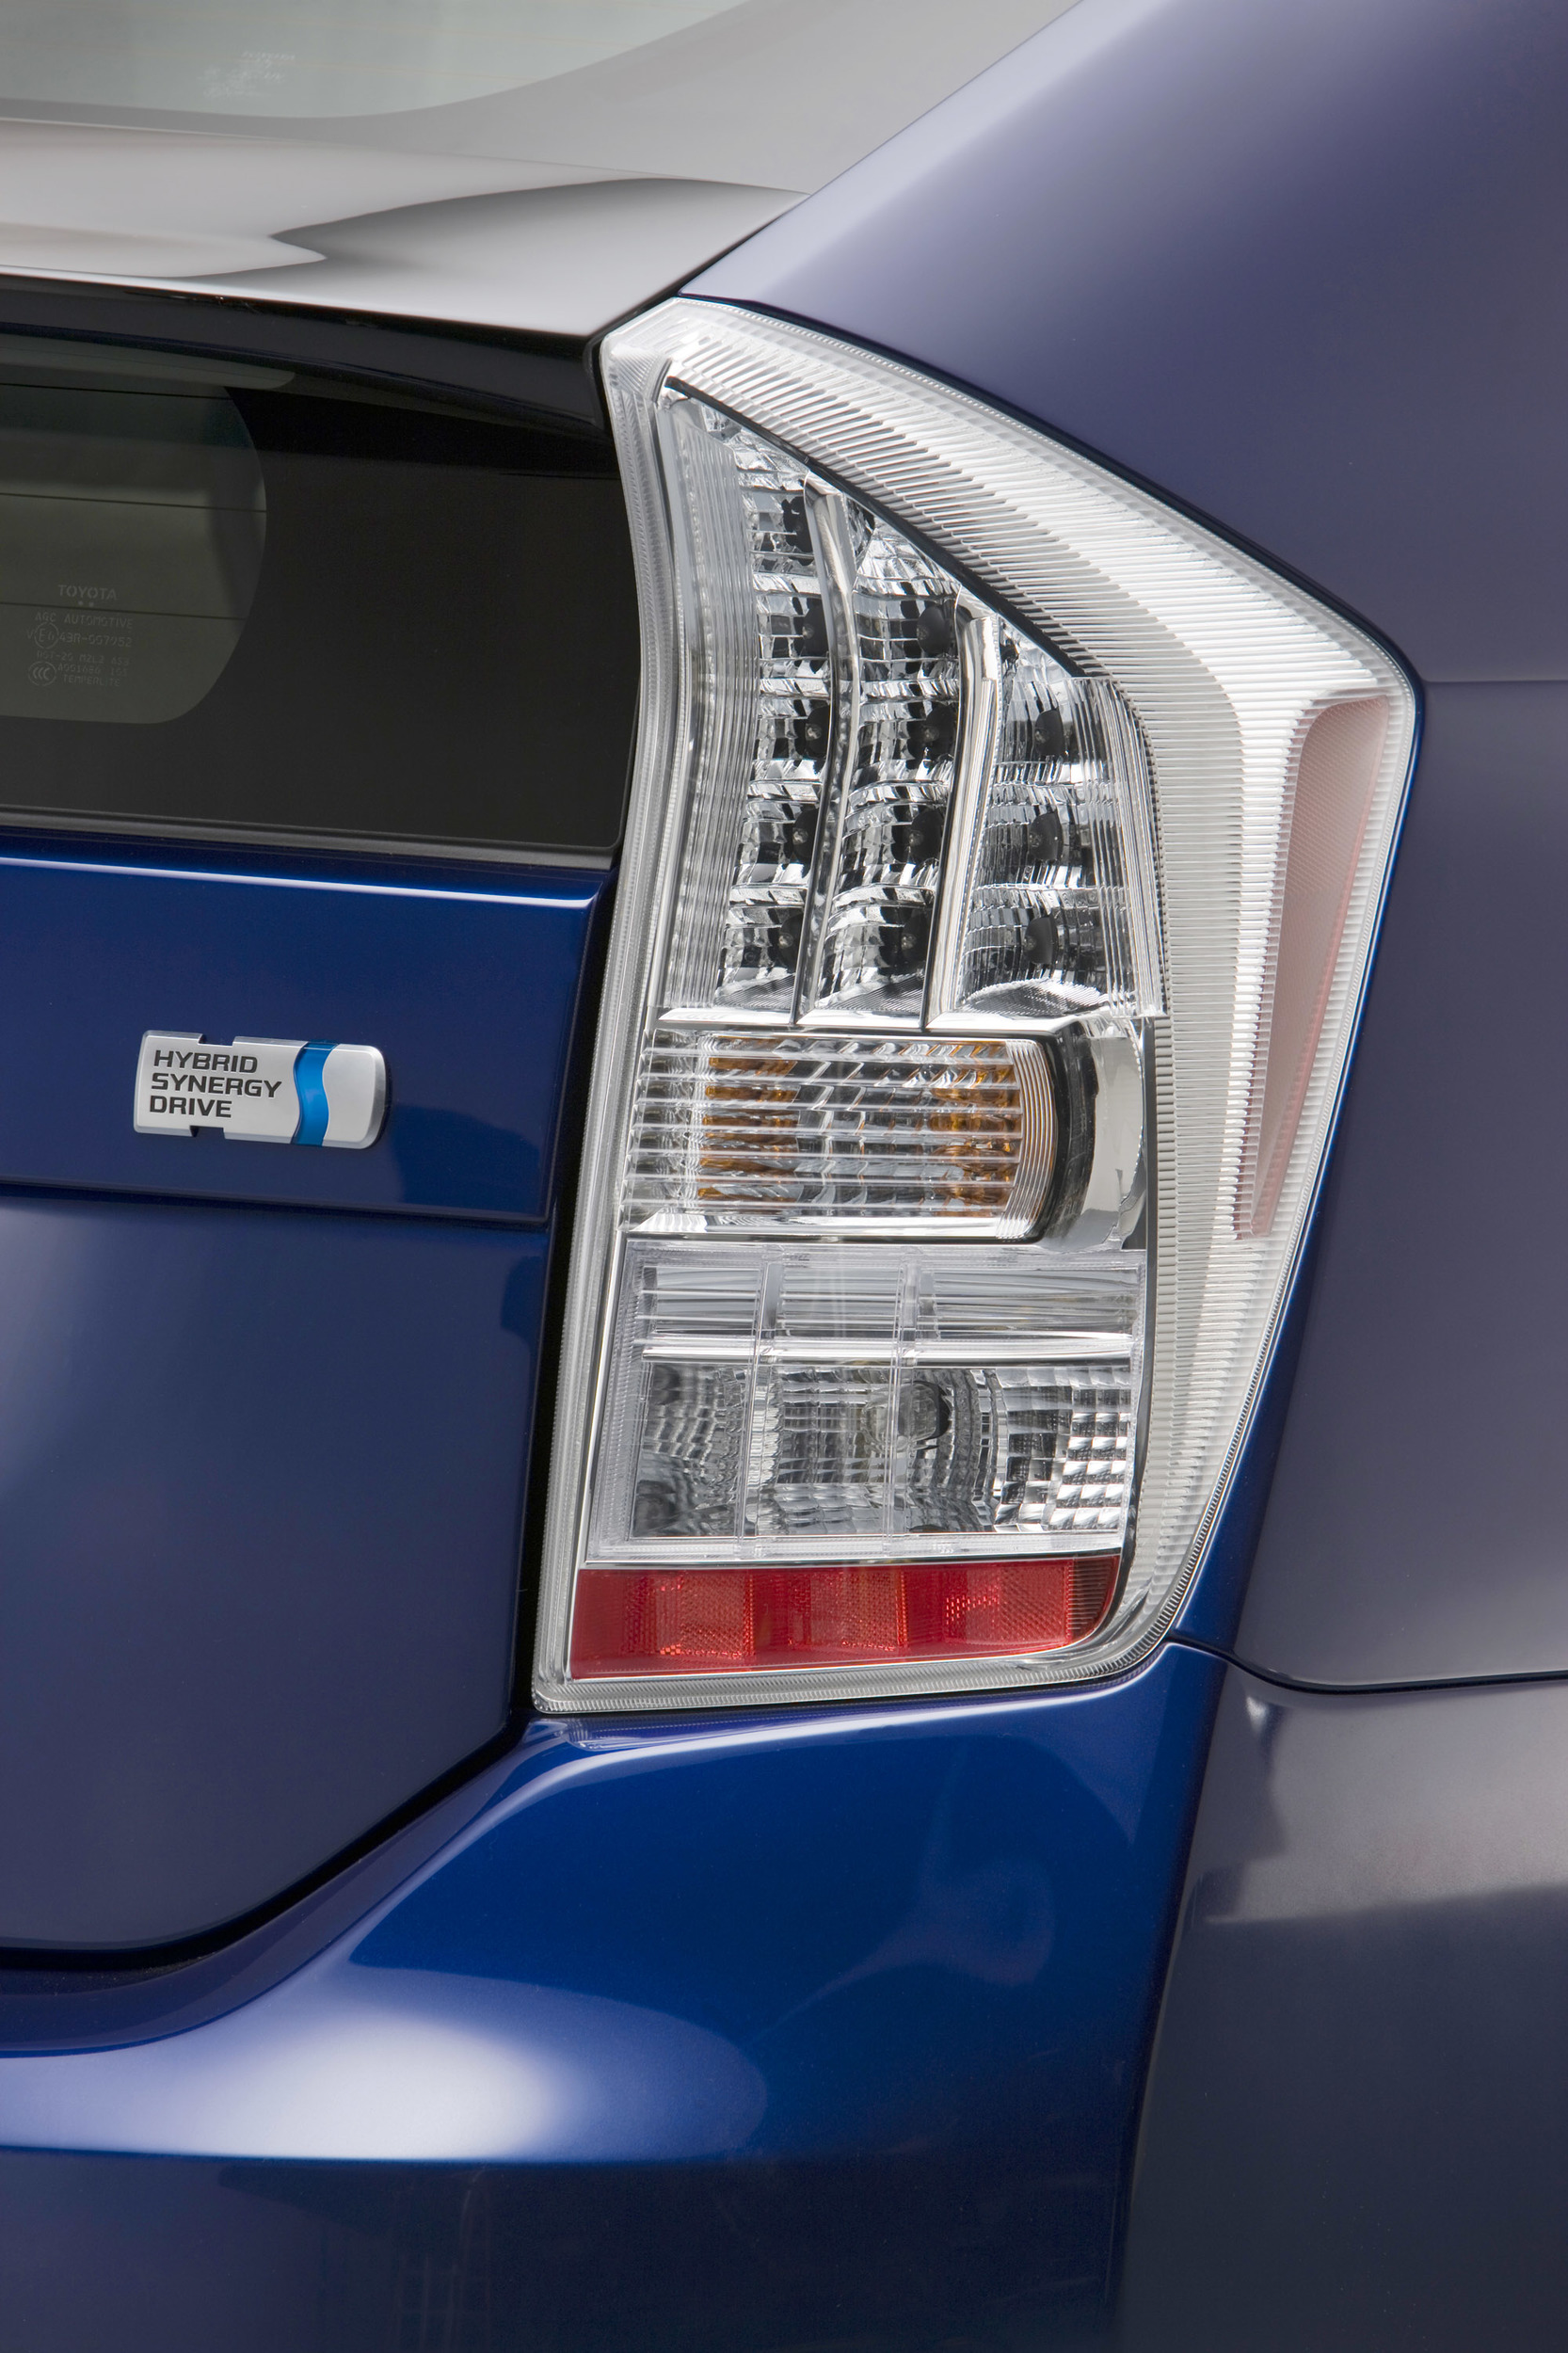 Toyota Prius tail light and hybrid badge